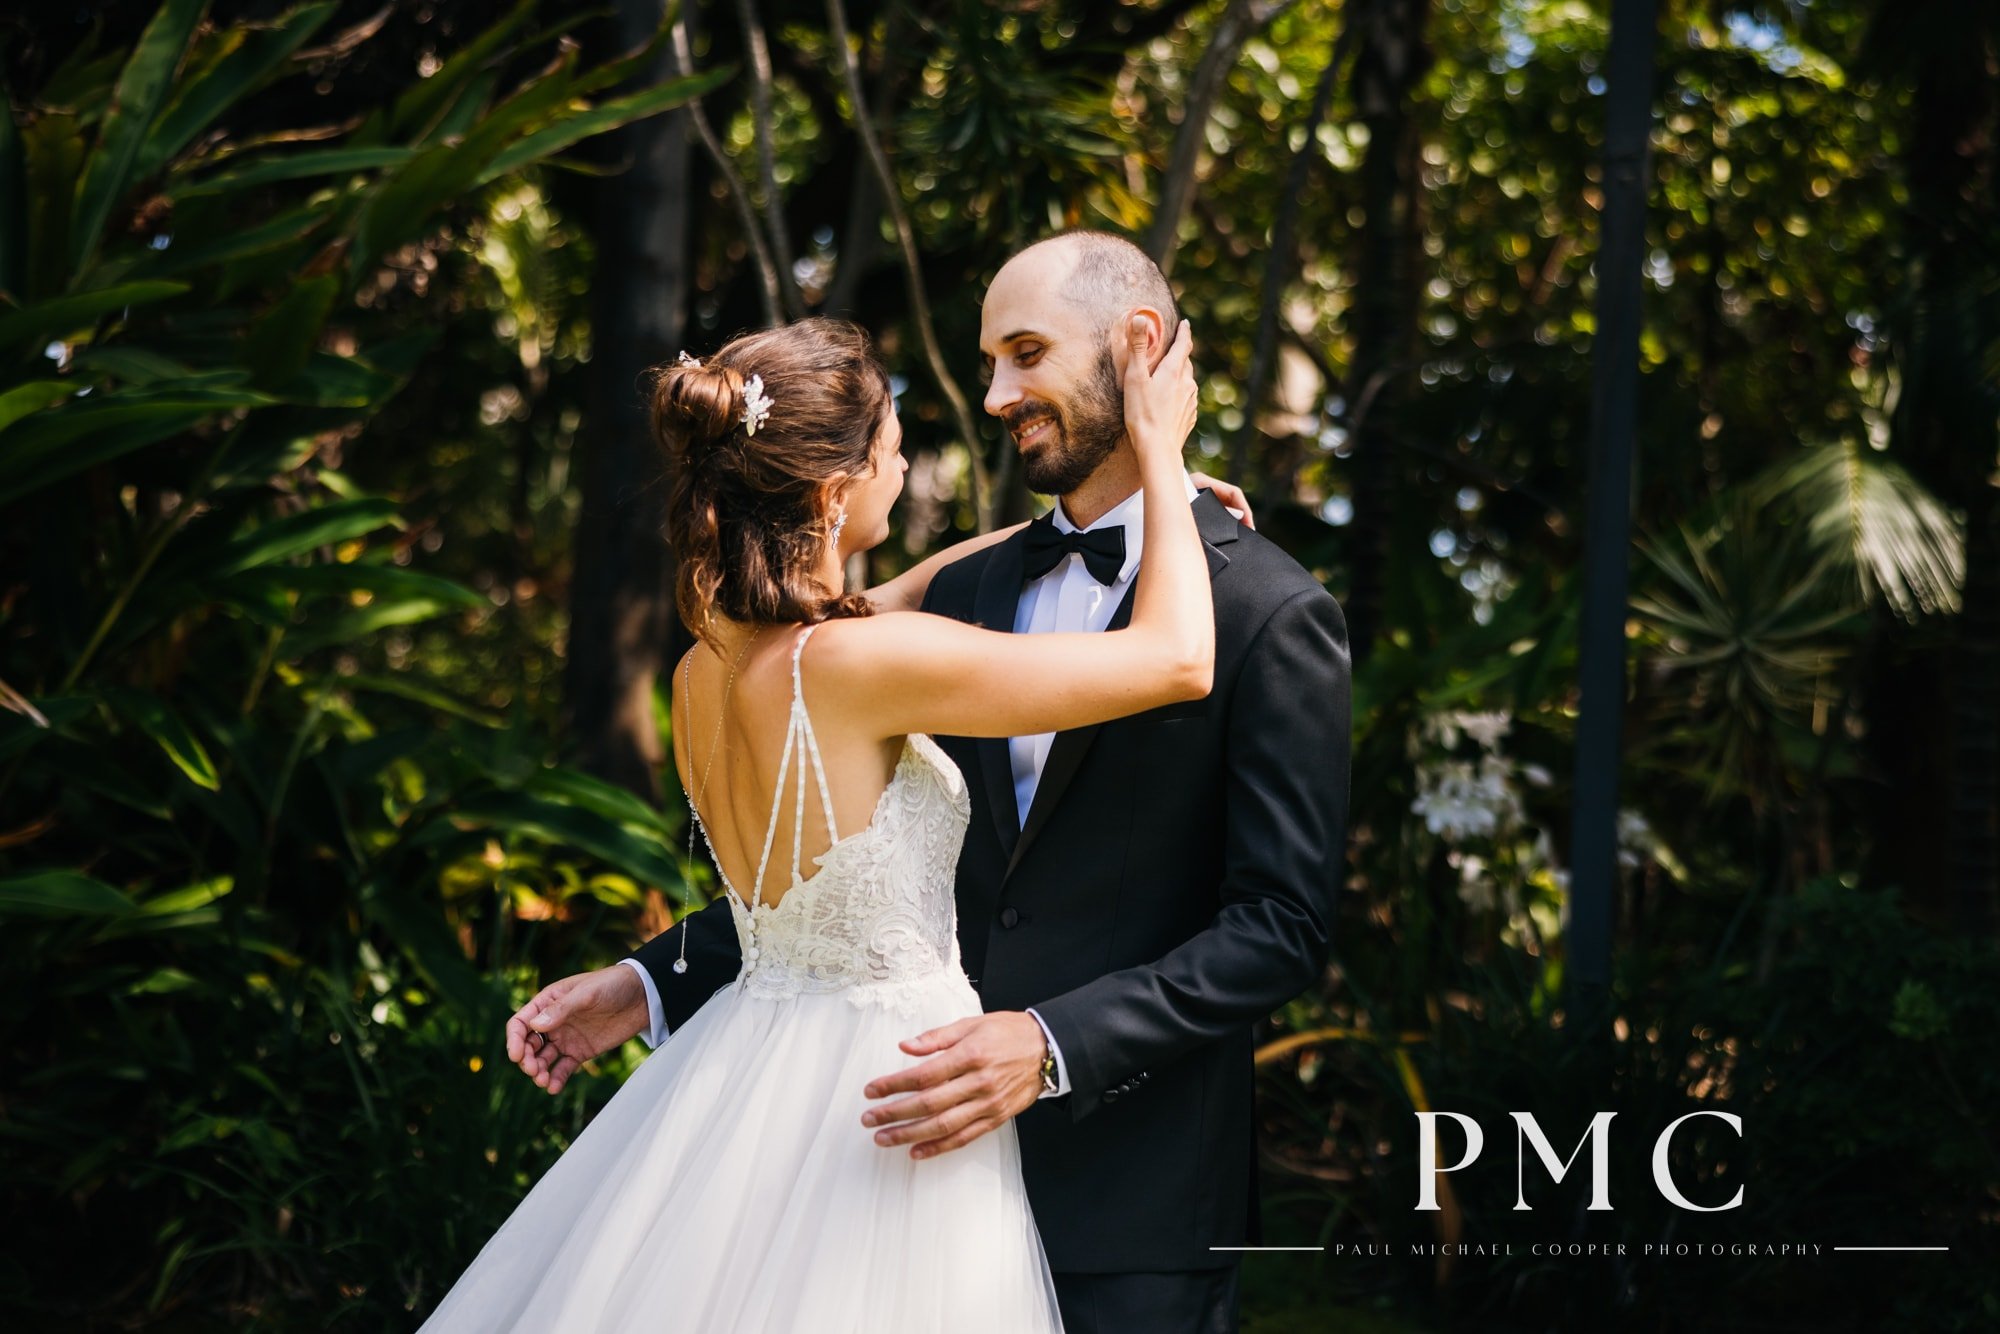 Paradise Point Resort & Spa - Summer Mission Bay Wedding - Best San Diego Wedding Photographer-8.jpg